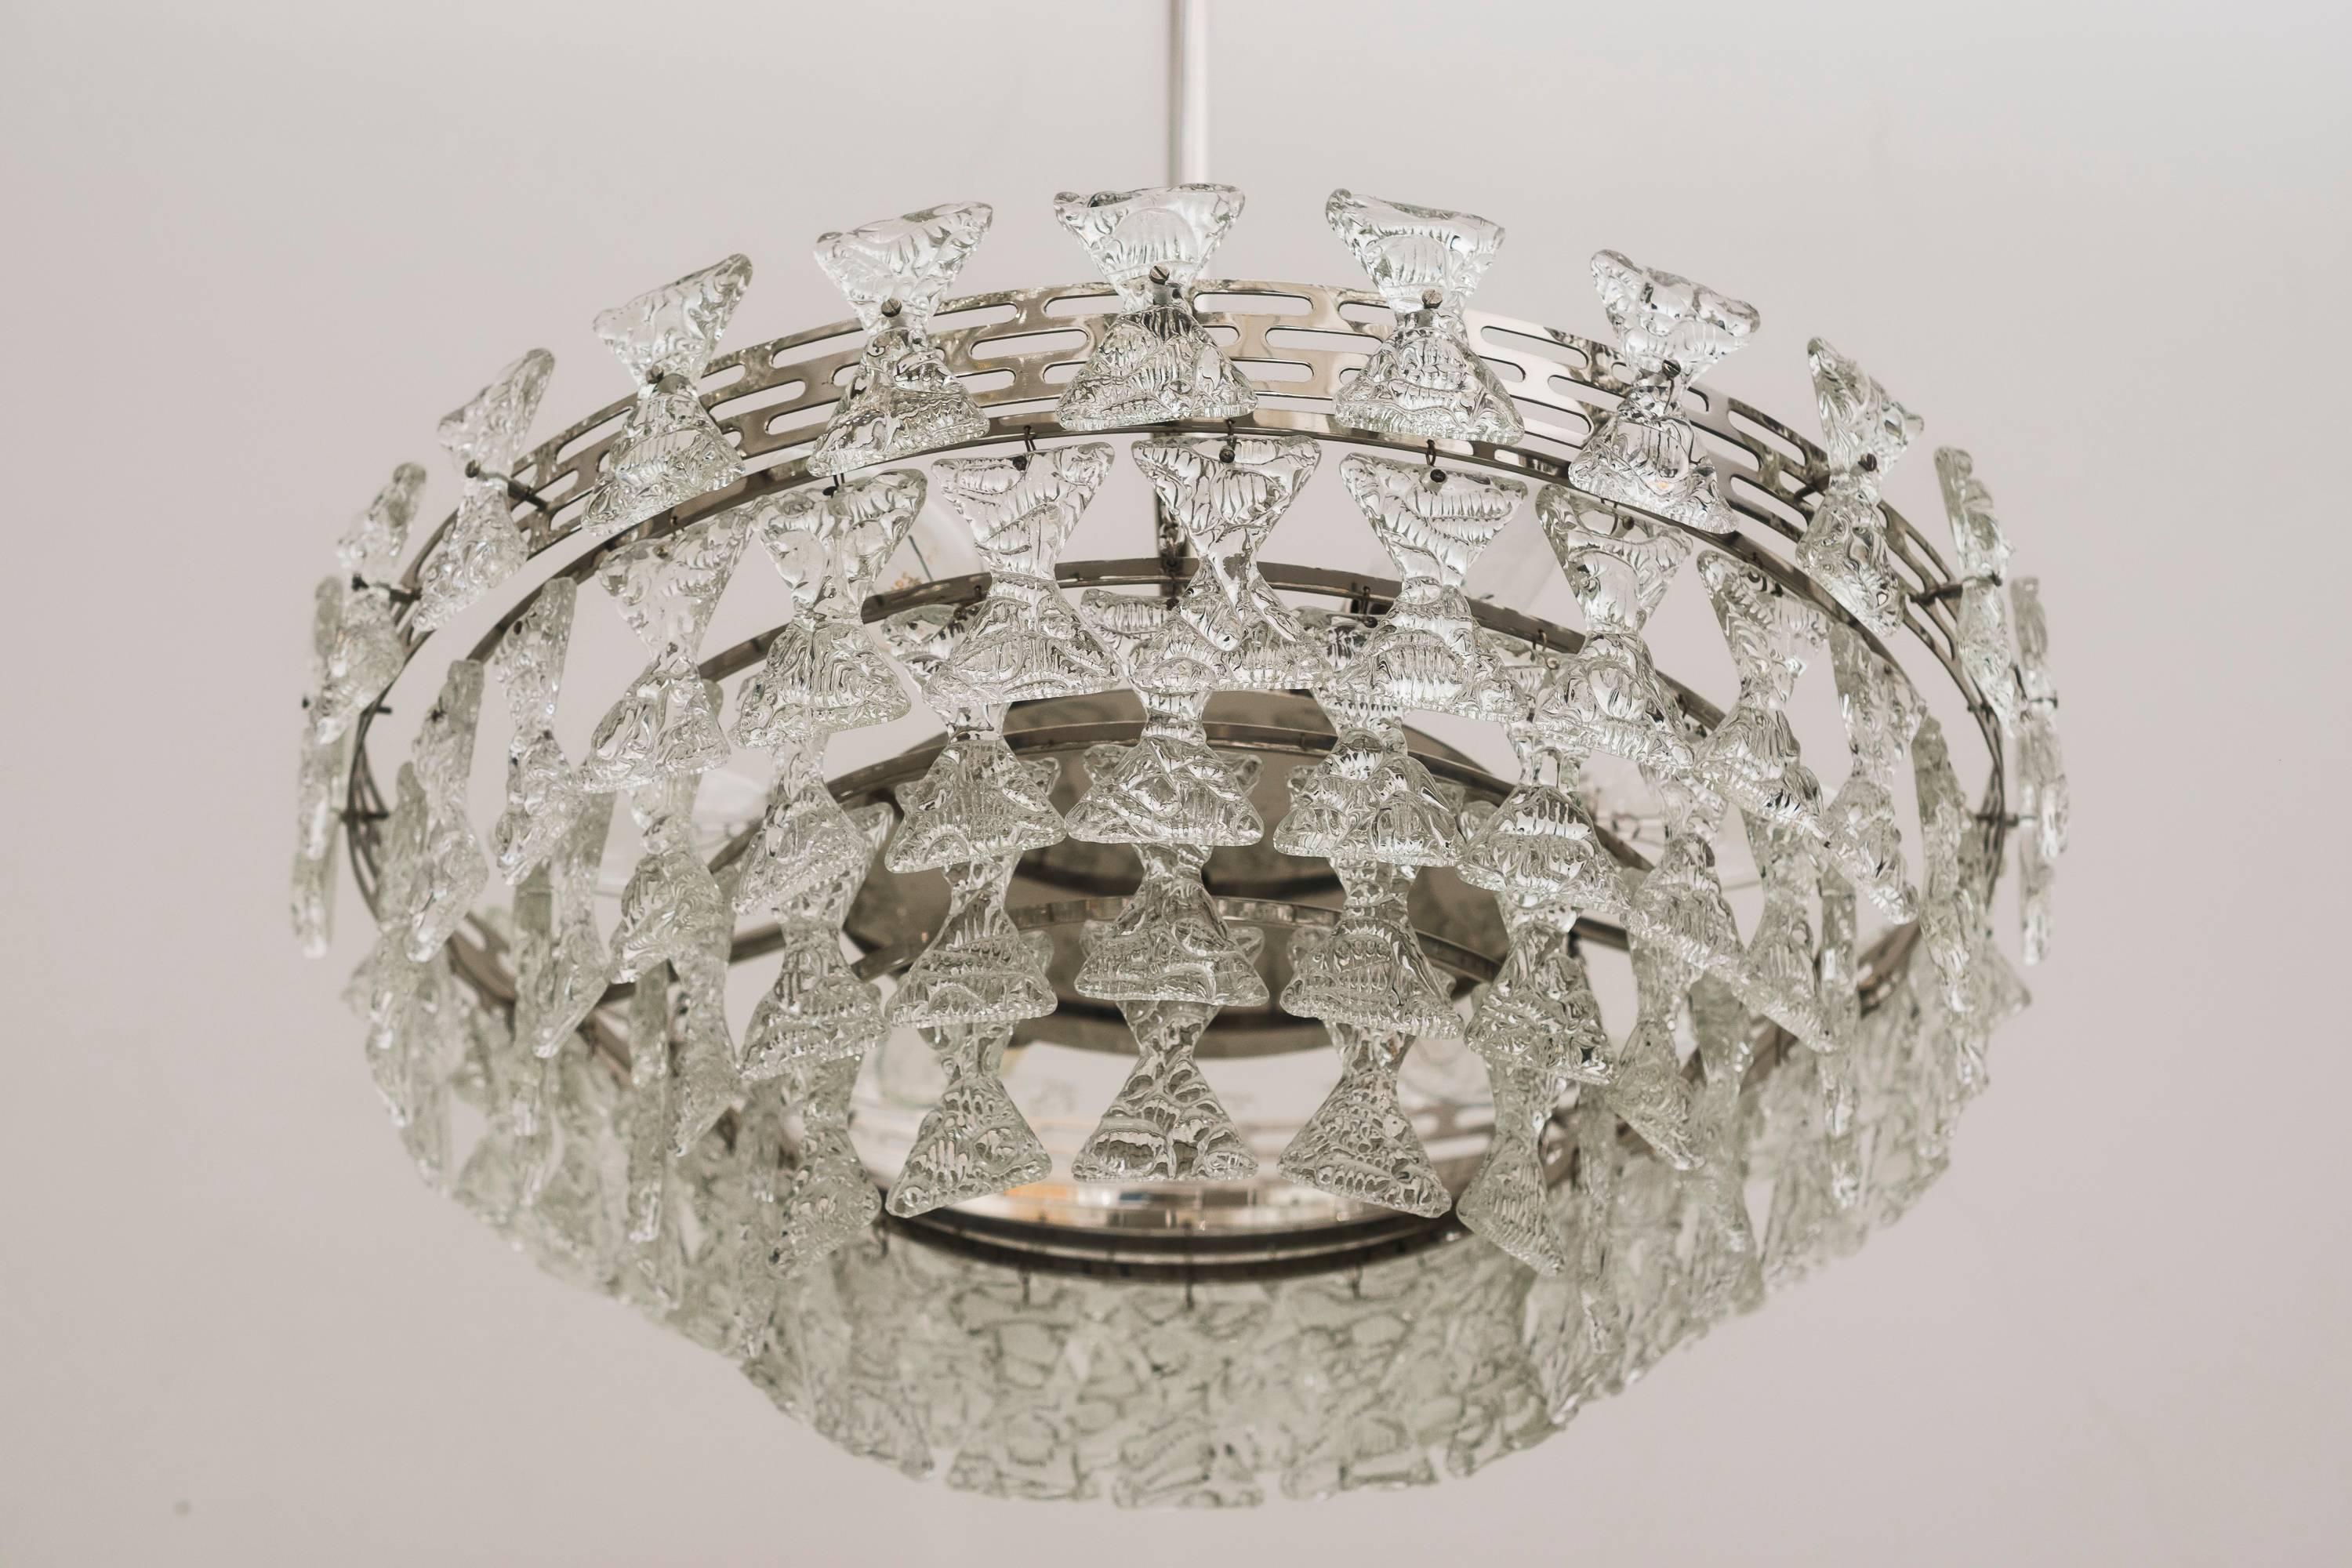 Rare Kalmar chandelier with textured glass, circa 1960s
Original condition
Six bulbs.